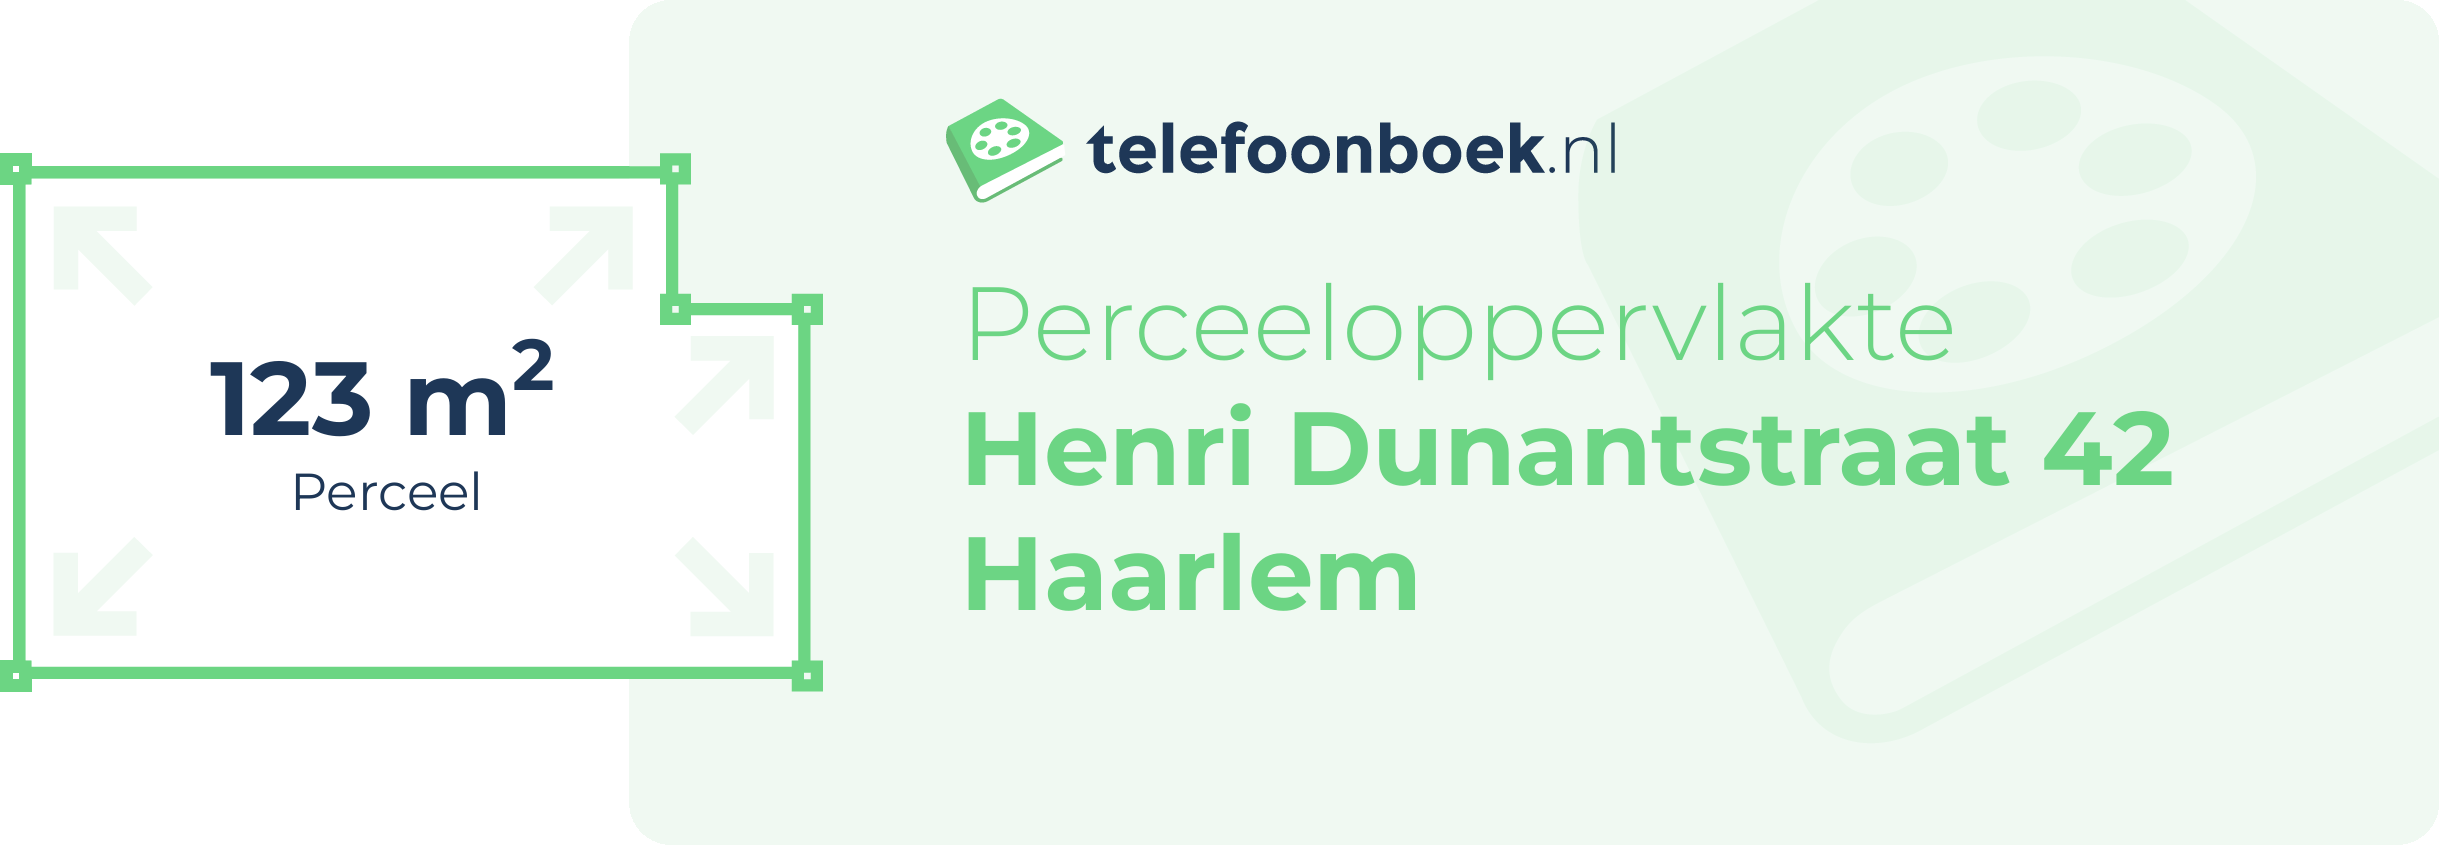 Perceeloppervlakte Henri Dunantstraat 42 Haarlem